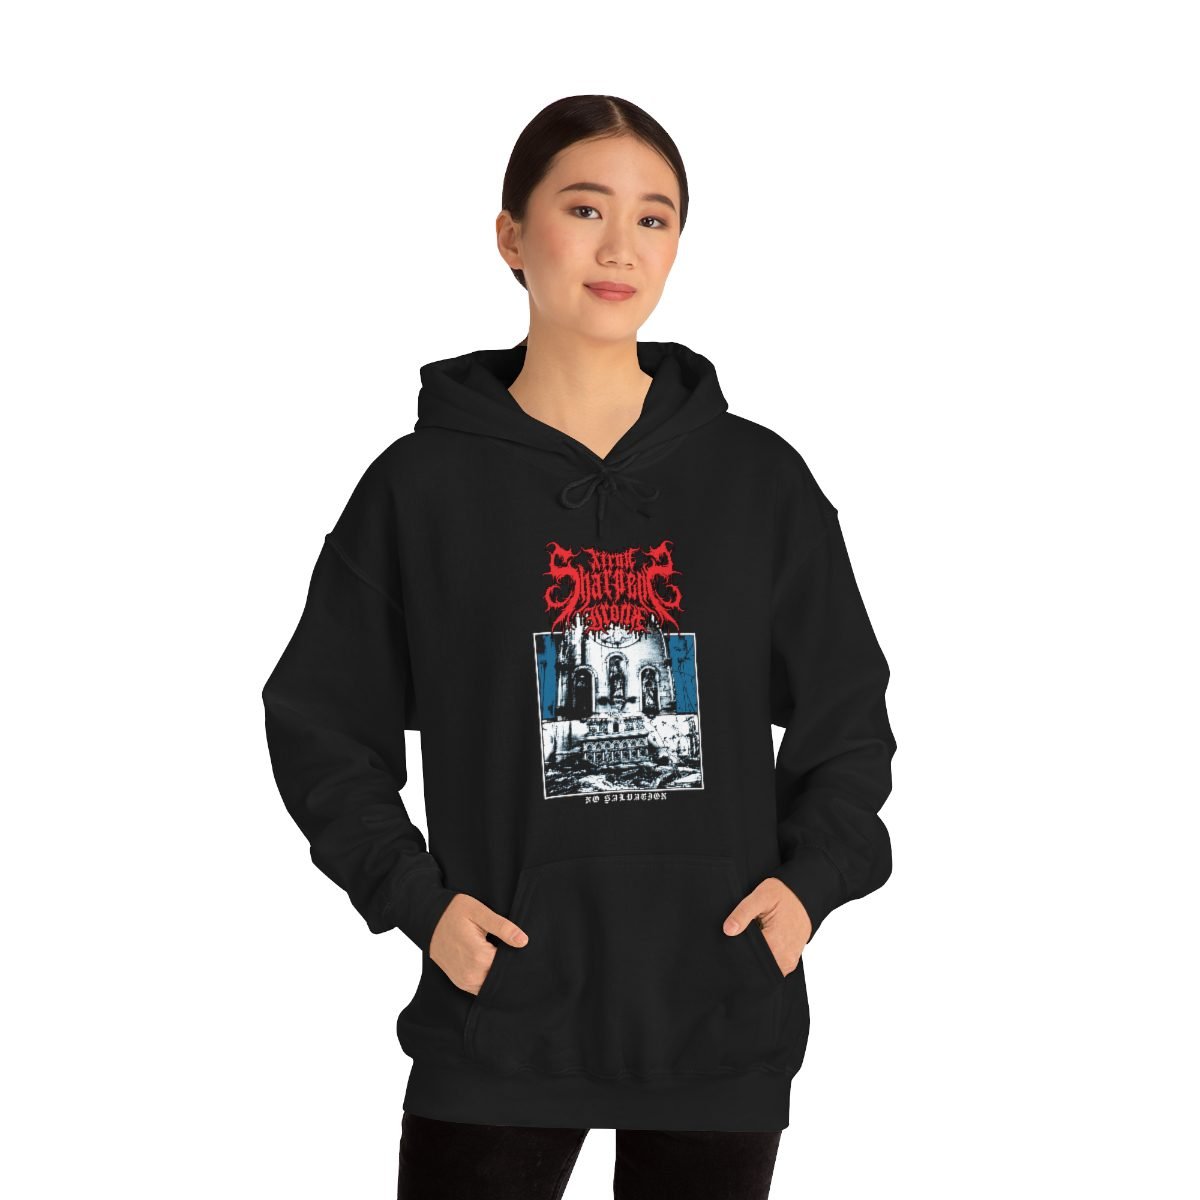 xIron Sharpens Ironx – No Salvation Pullover Hooded Sweatshirt 185MD